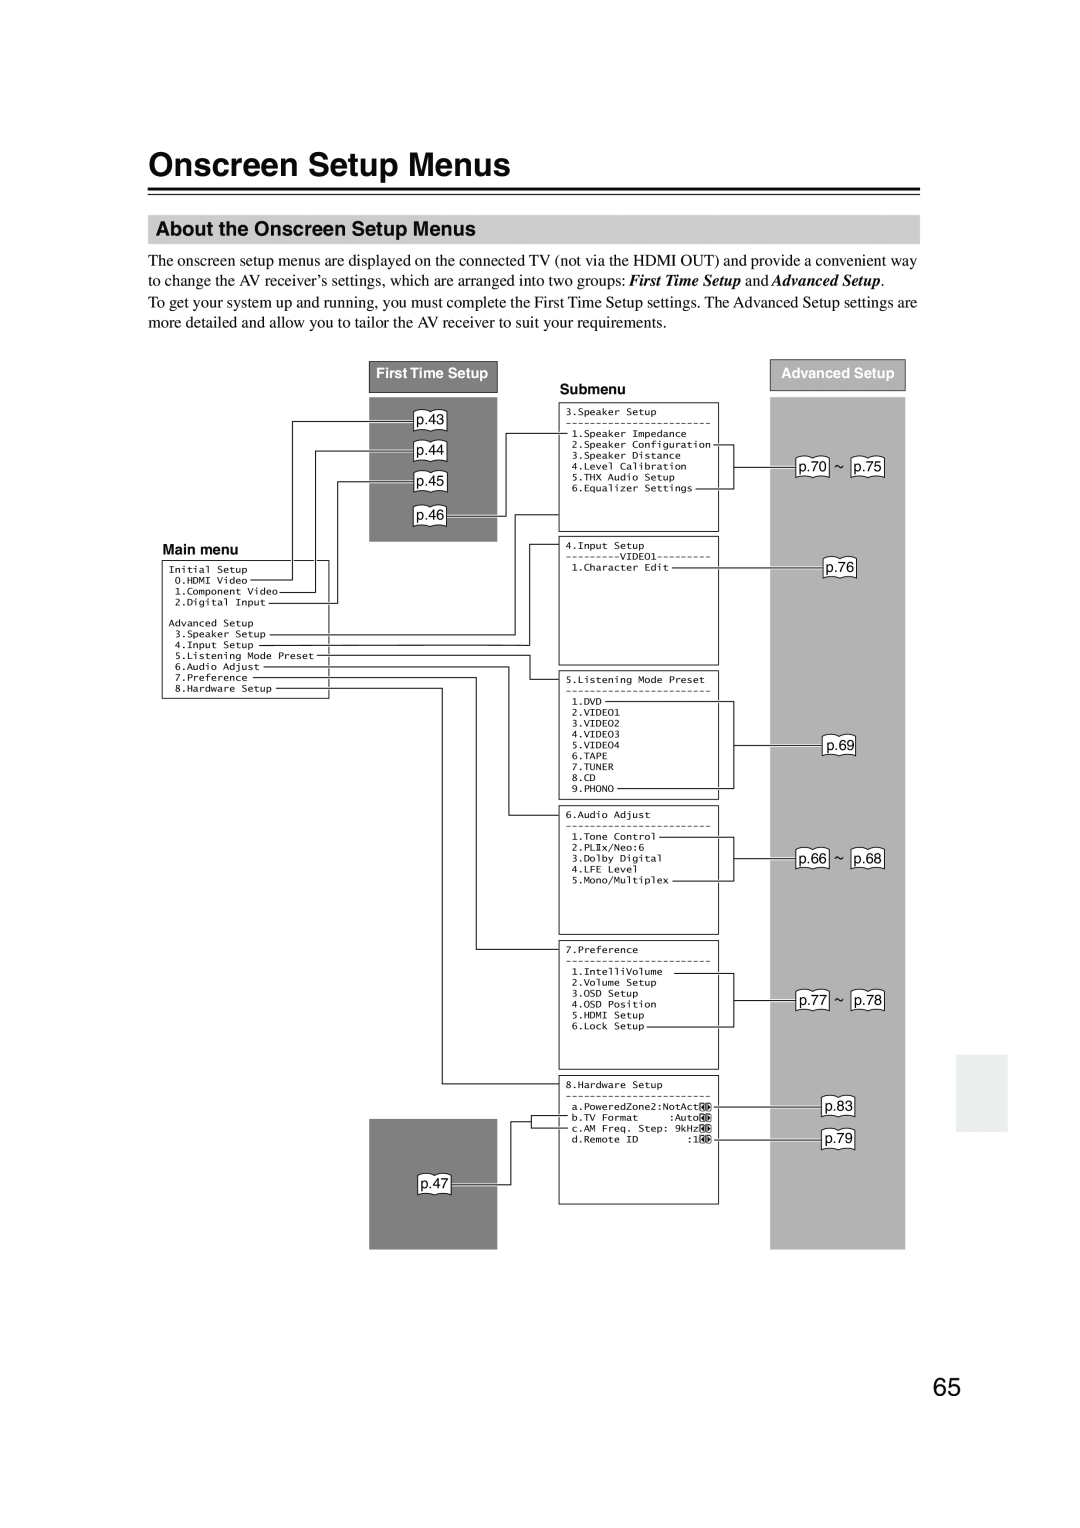 Onkyo SR804 instruction manual About the Onscreen Setup Menus 